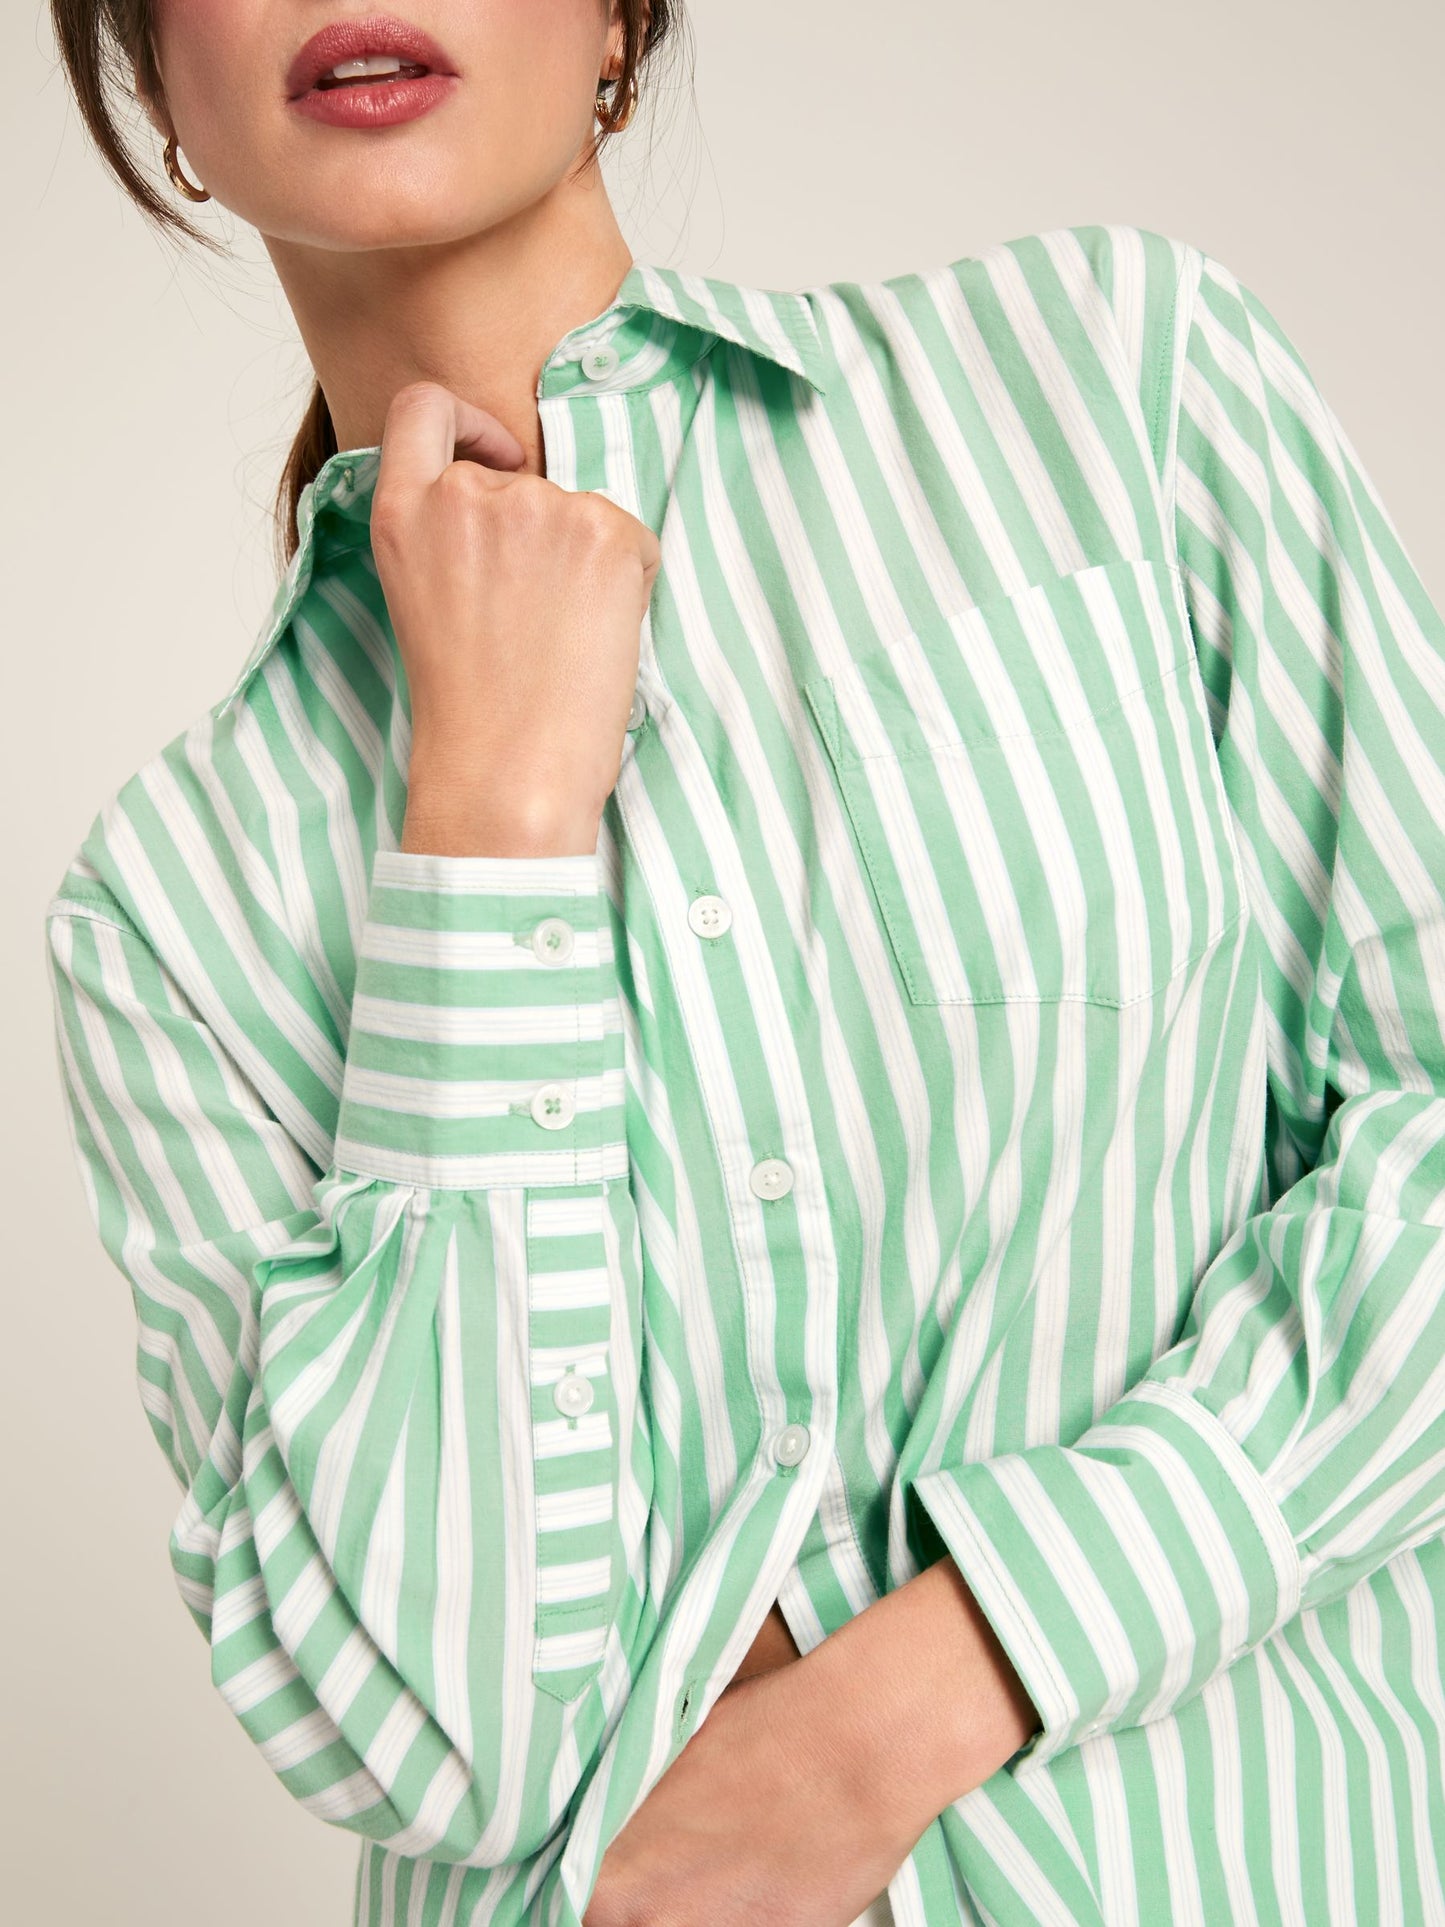 Joules Amilla Striped Cotton Shirt